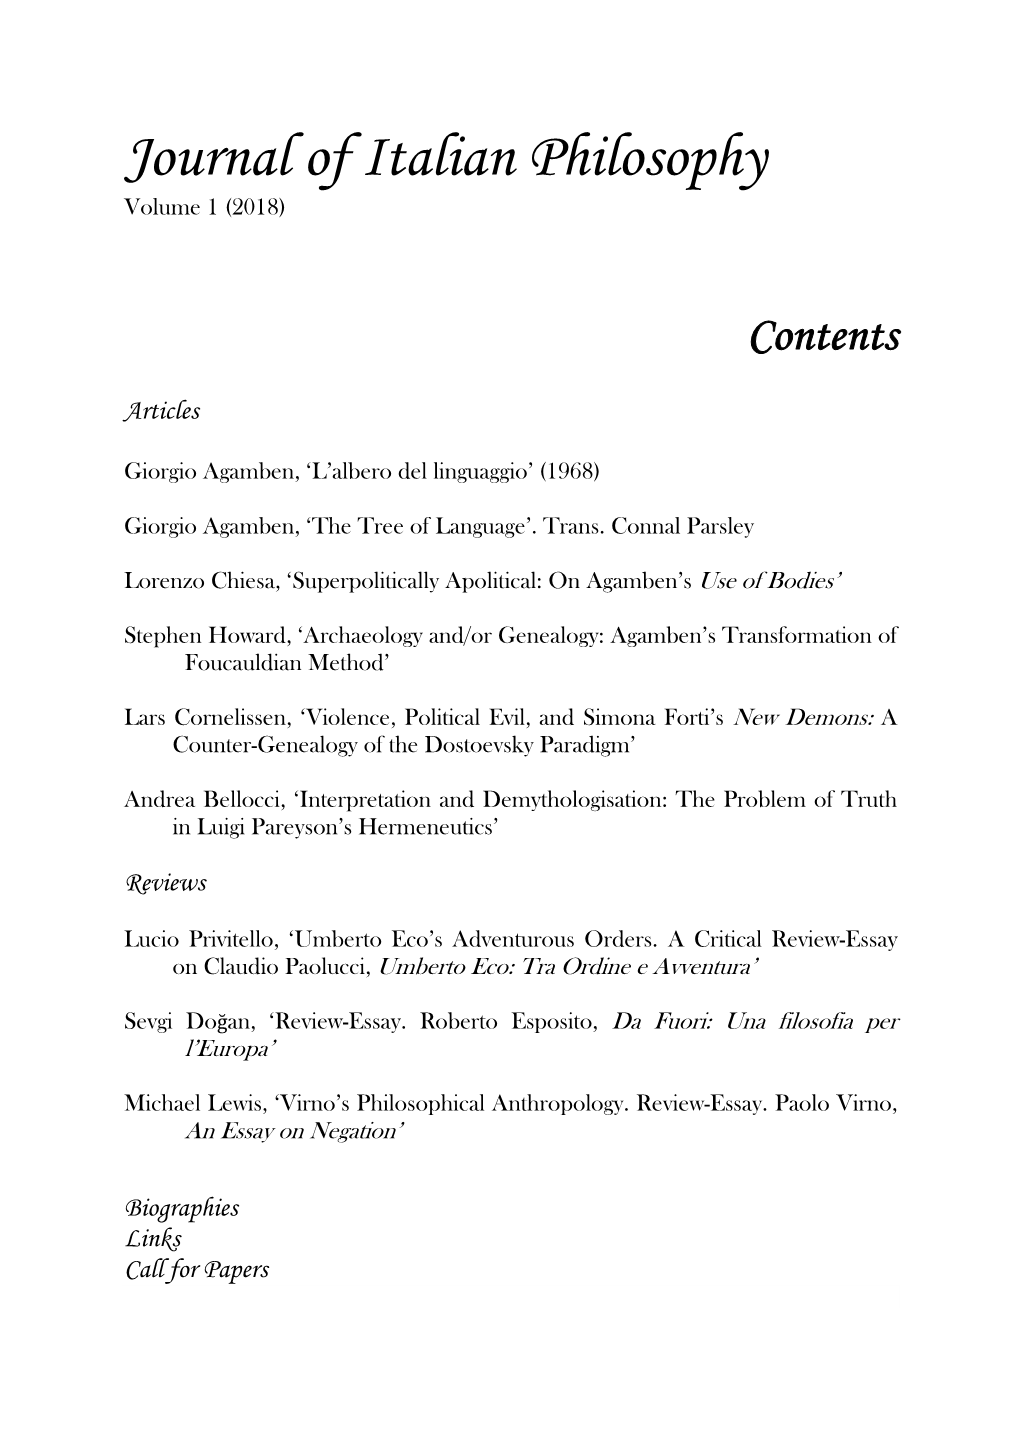 Journal of Italian Philosophy, Volume 1 (2018)